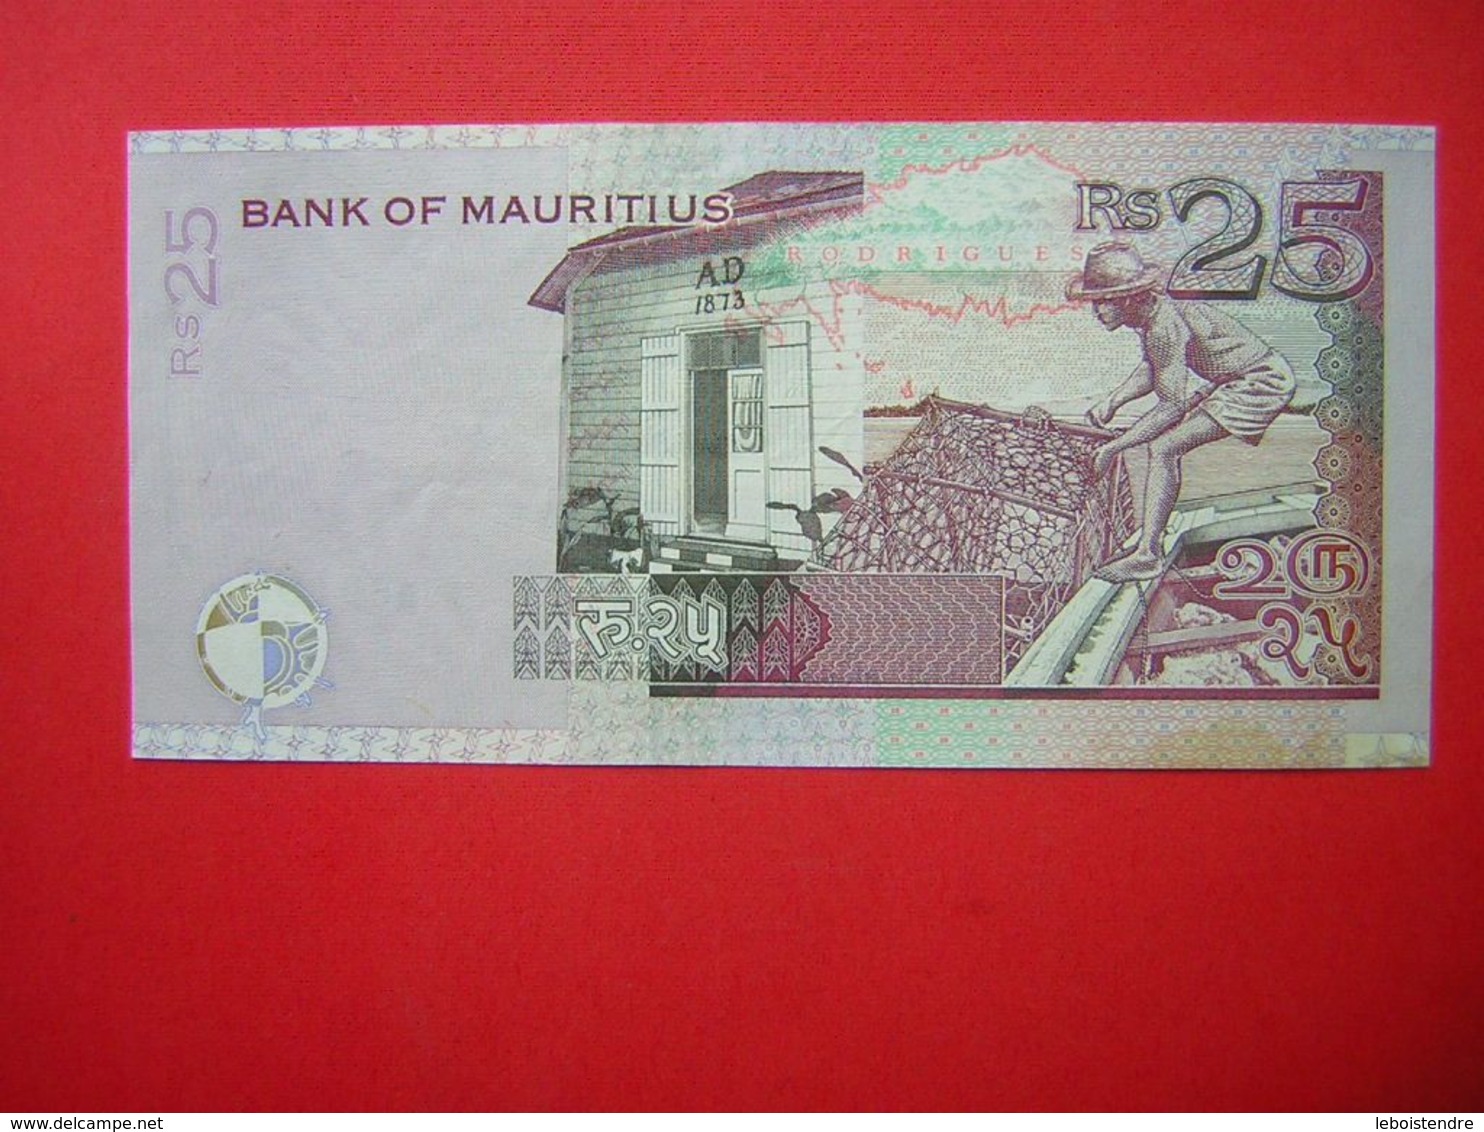 1 BILLET BANK OF MAURITIUS  RS 25  TWENTY FIVE   1999 - Maurice